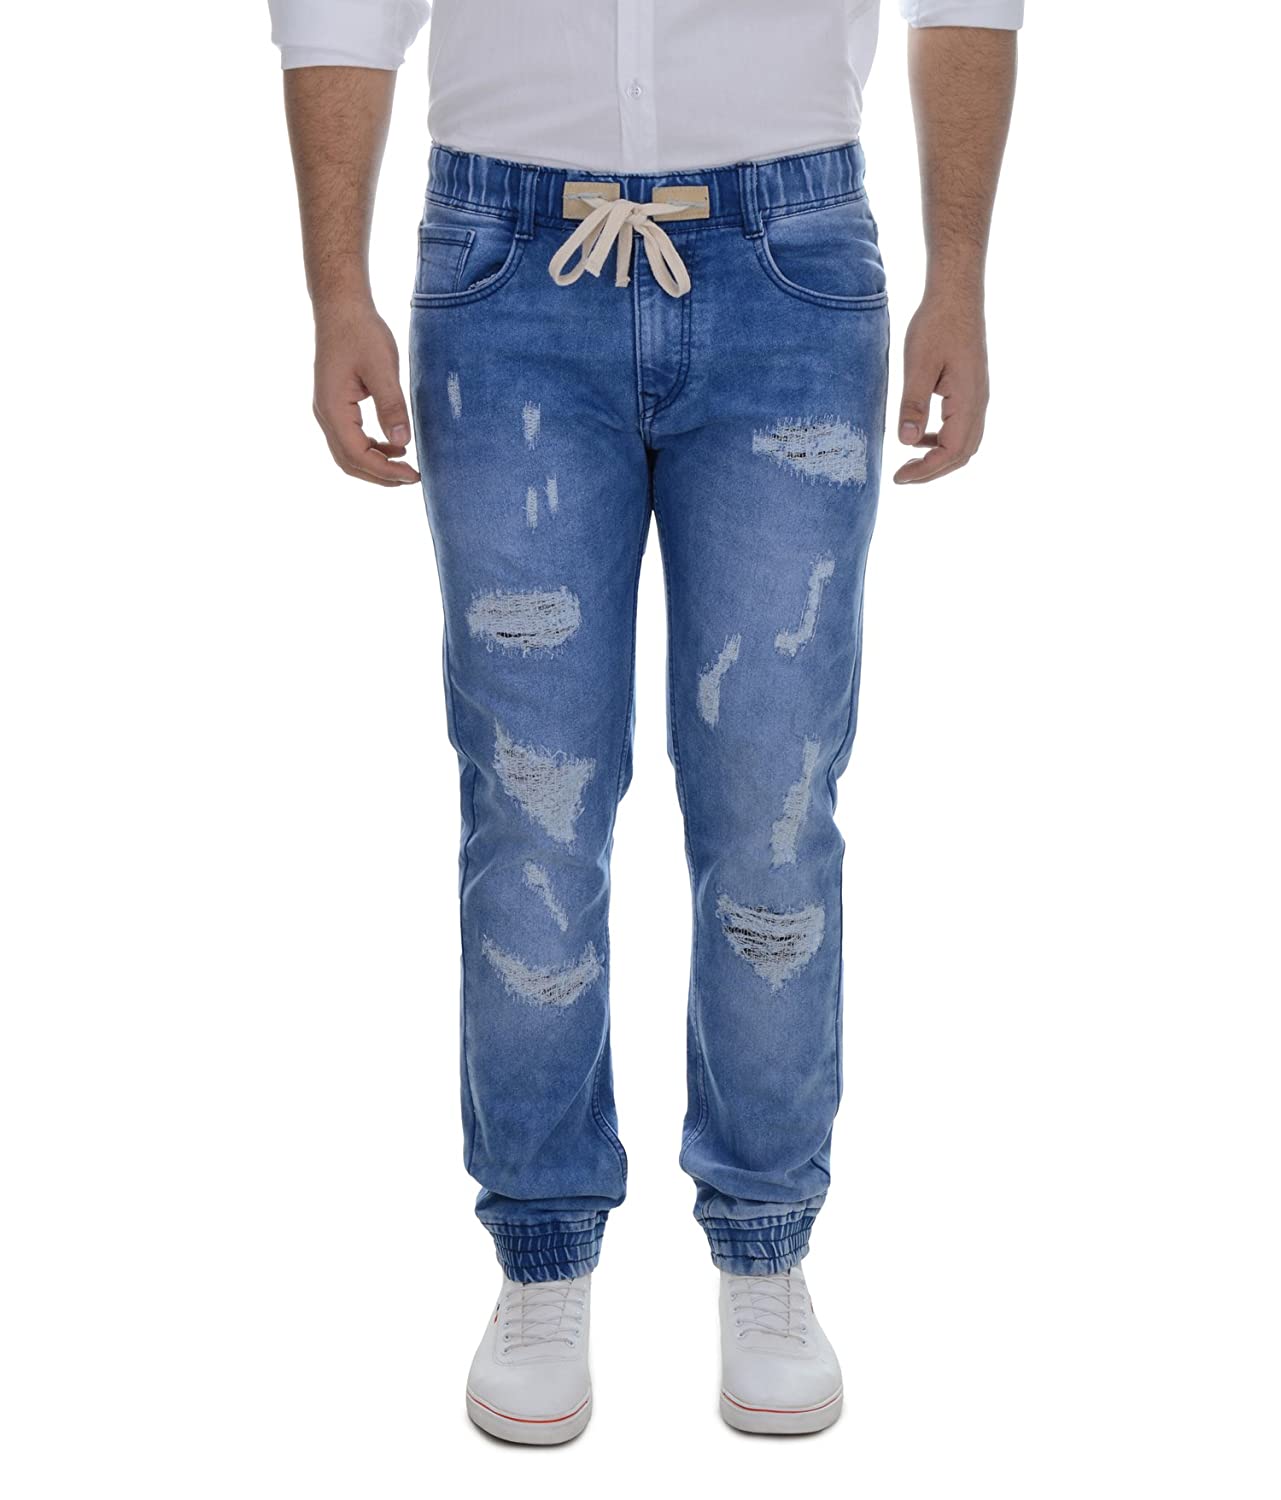 Buy Girls Jeans with Damage Patterns – Mumkins